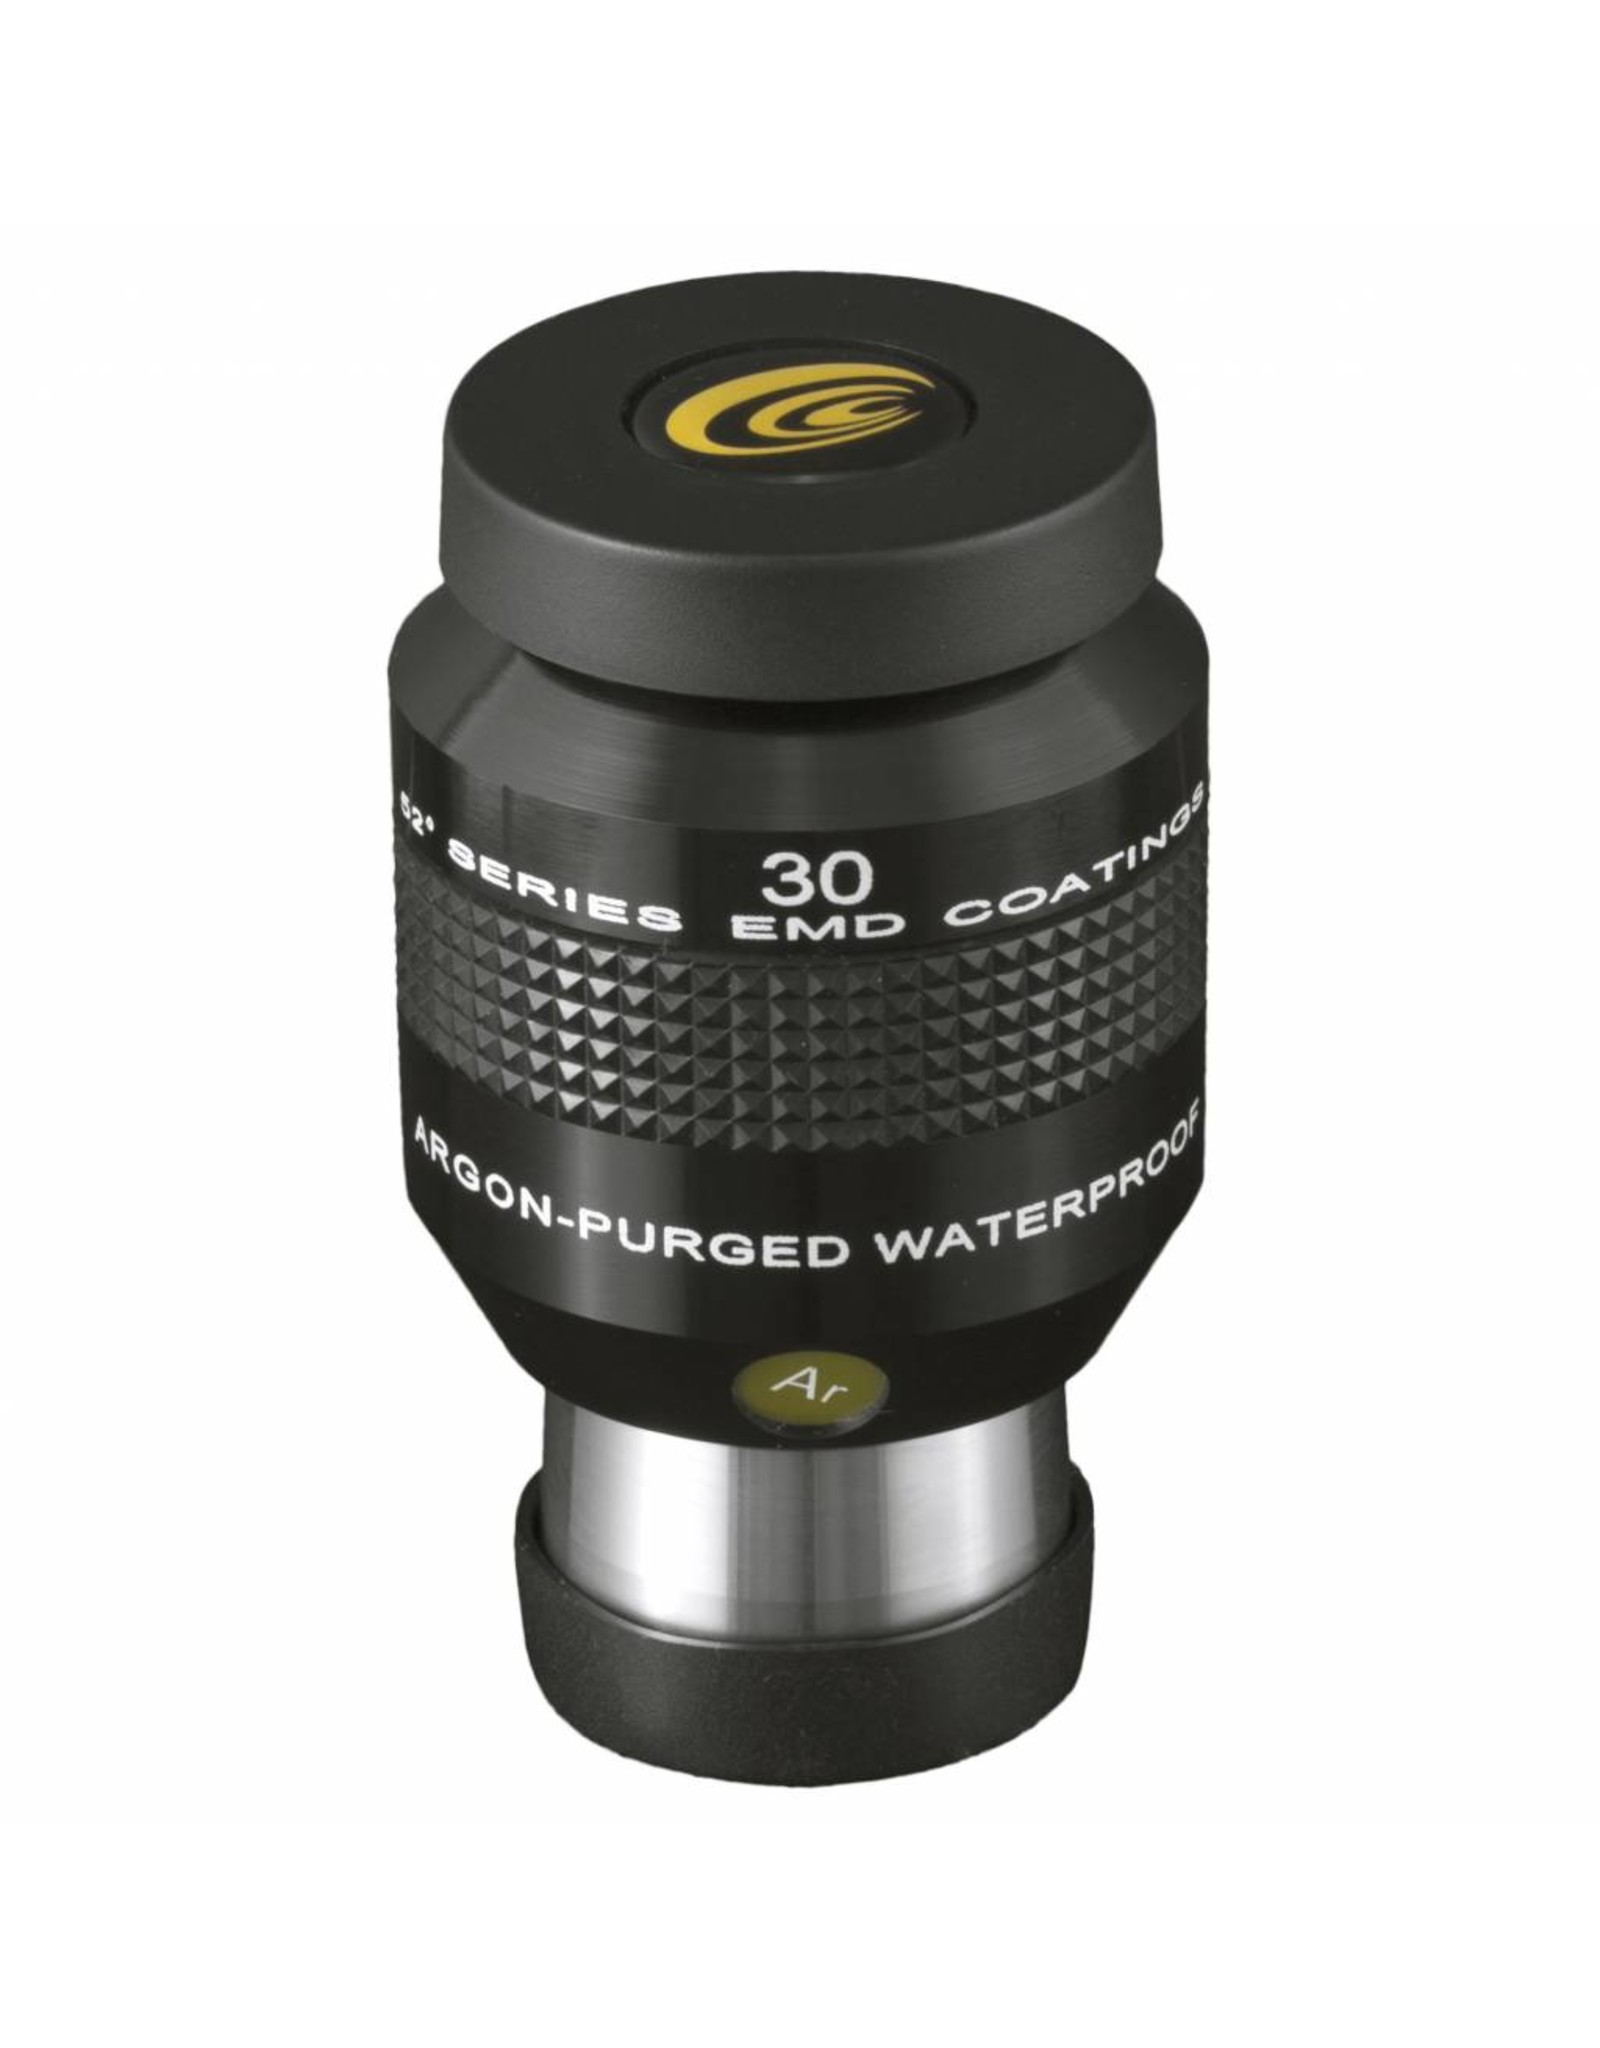 Explore Scientific Explore Scientific 52° 30mm Waterproof Eyepiece